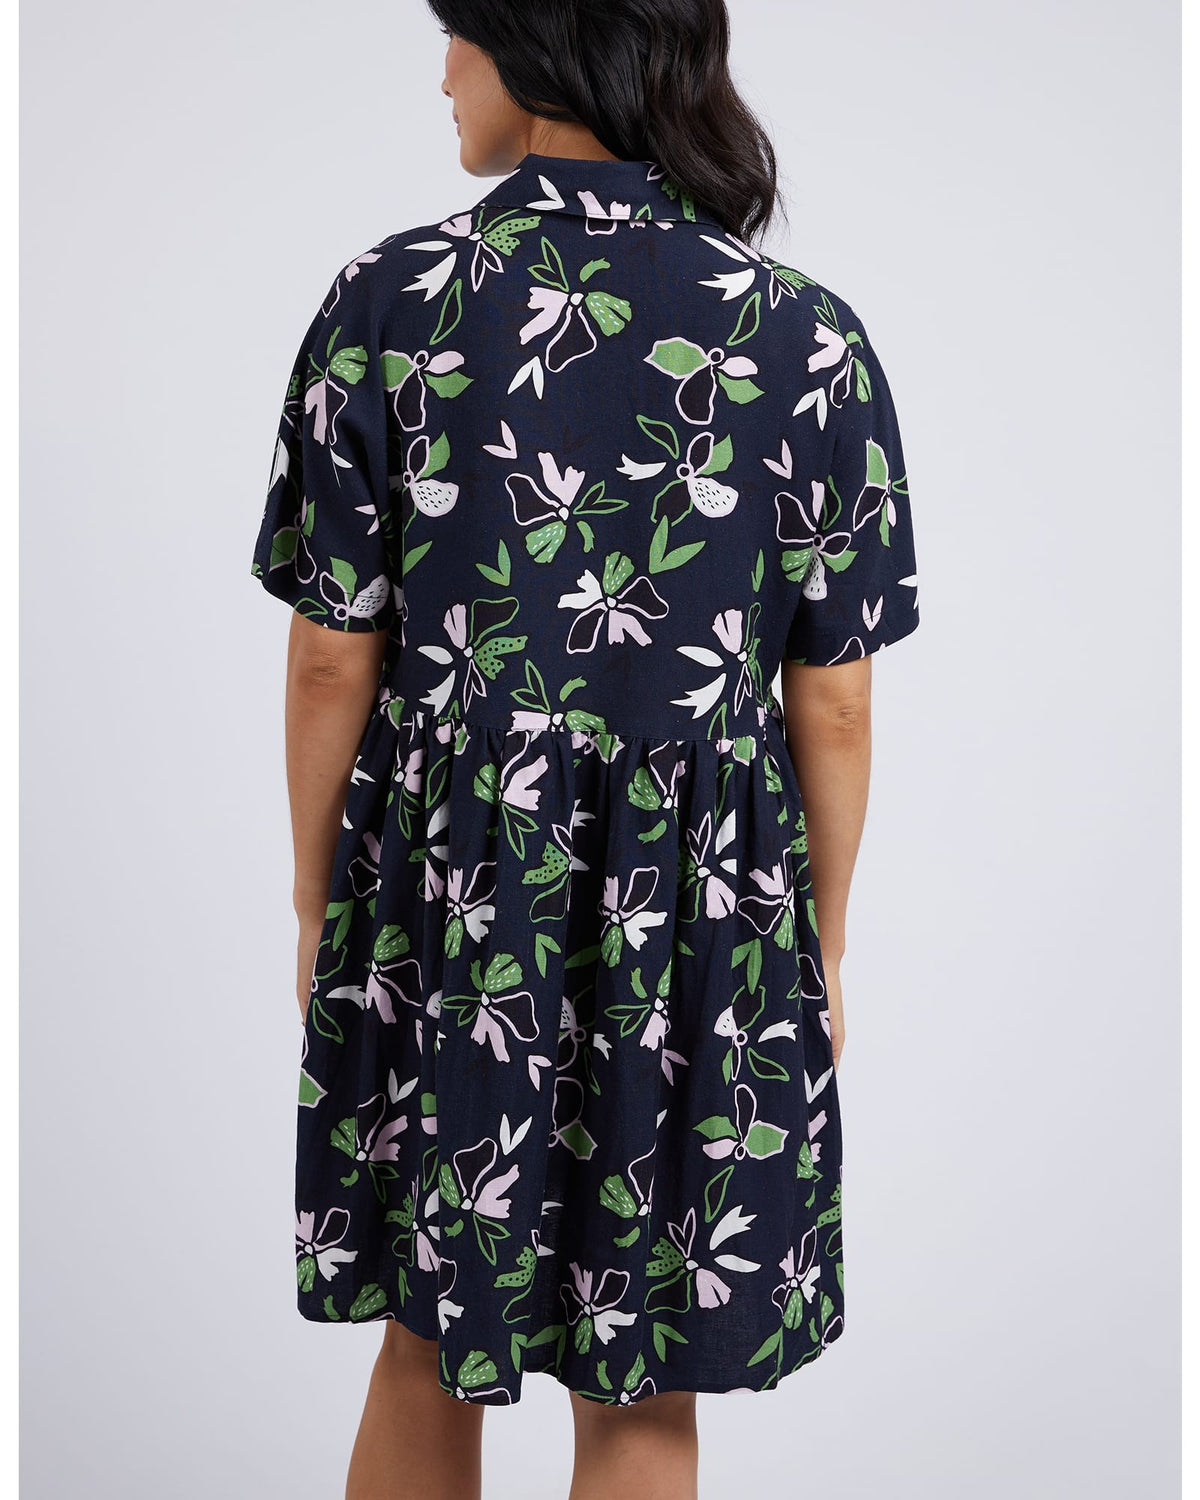 Elm - Idyll Floral Dress - Navy Green